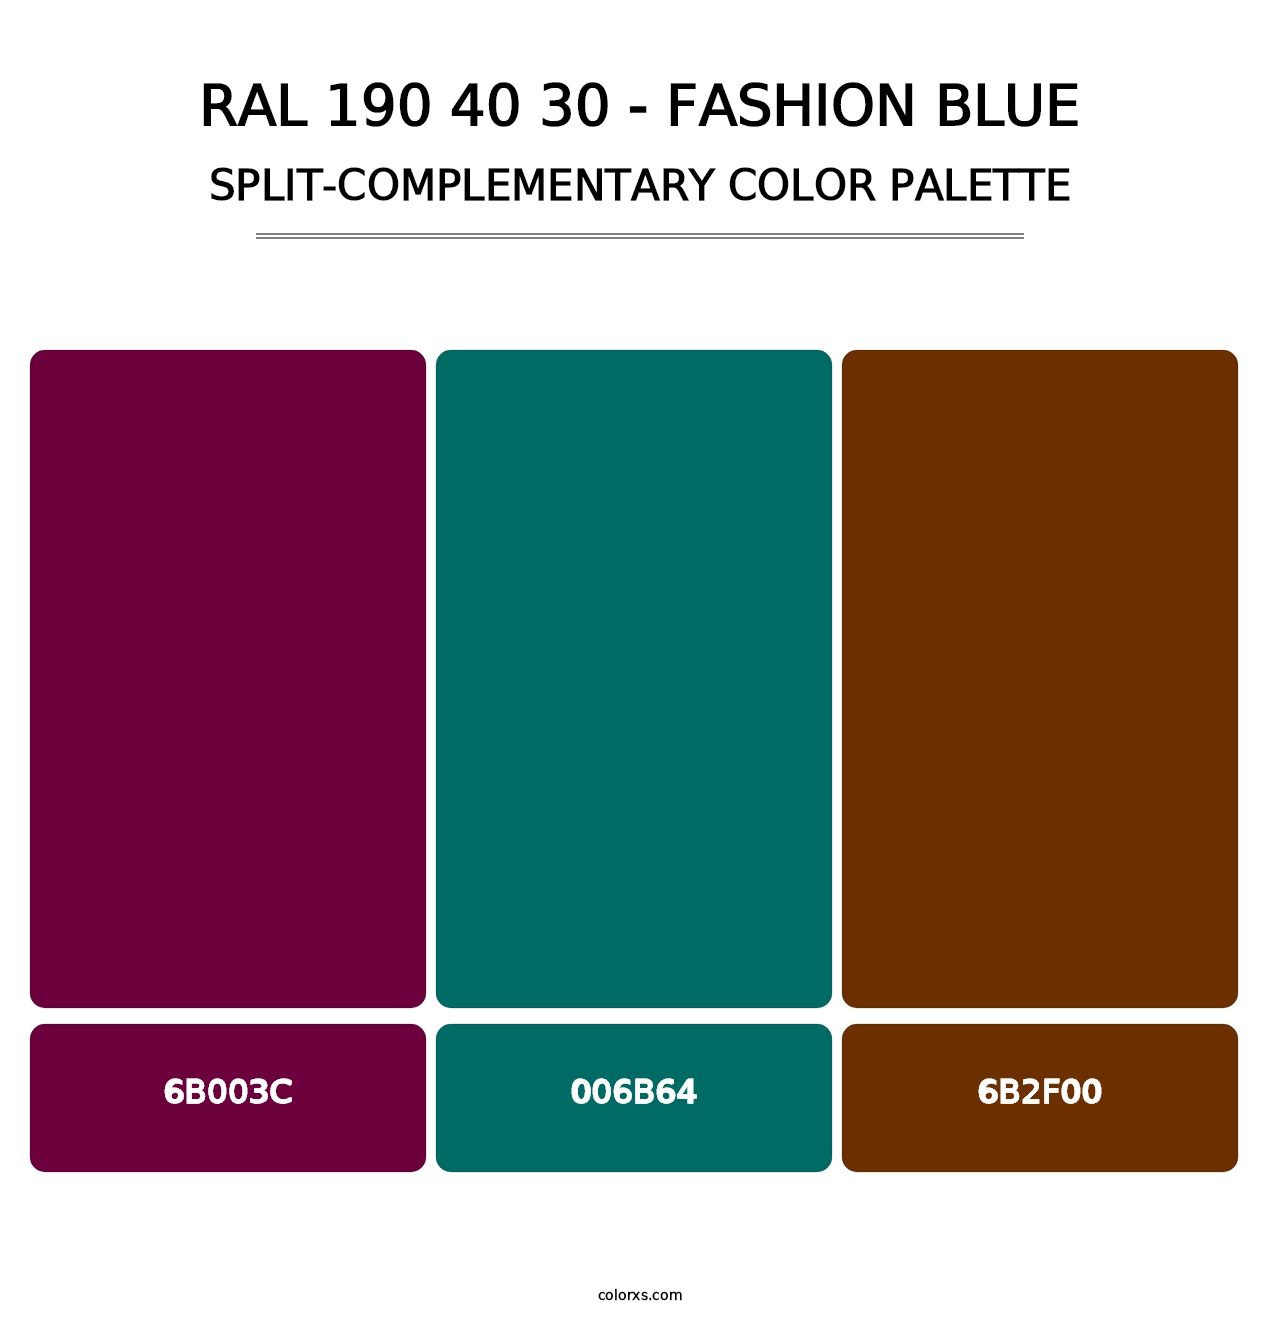 RAL 190 40 30 - Fashion Blue - Split-Complementary Color Palette